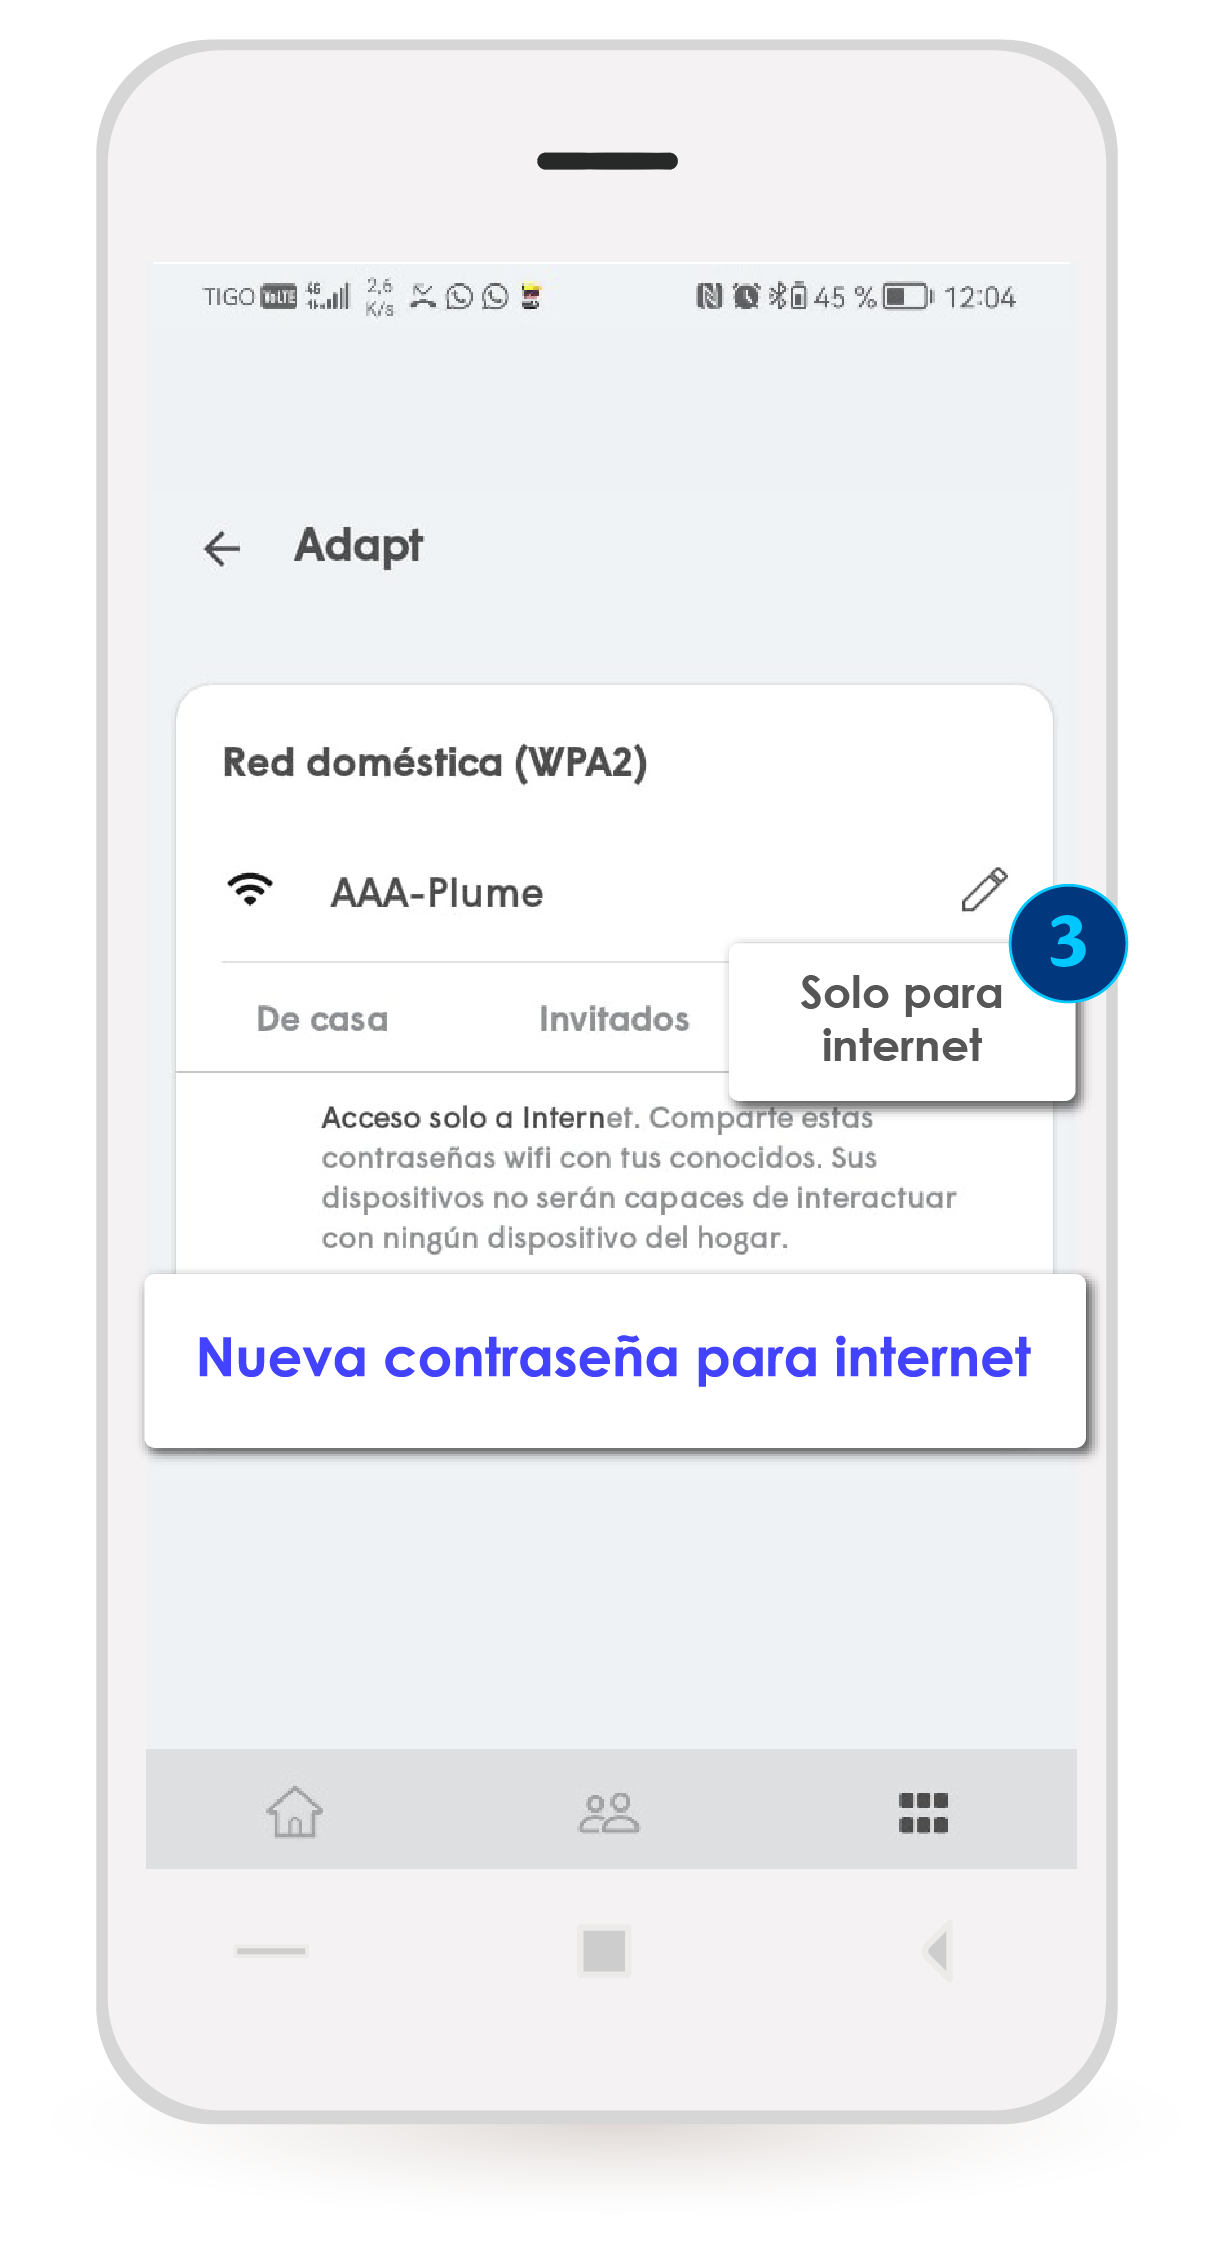 aw-nueva_contrasena_solo_internet_tigo_app